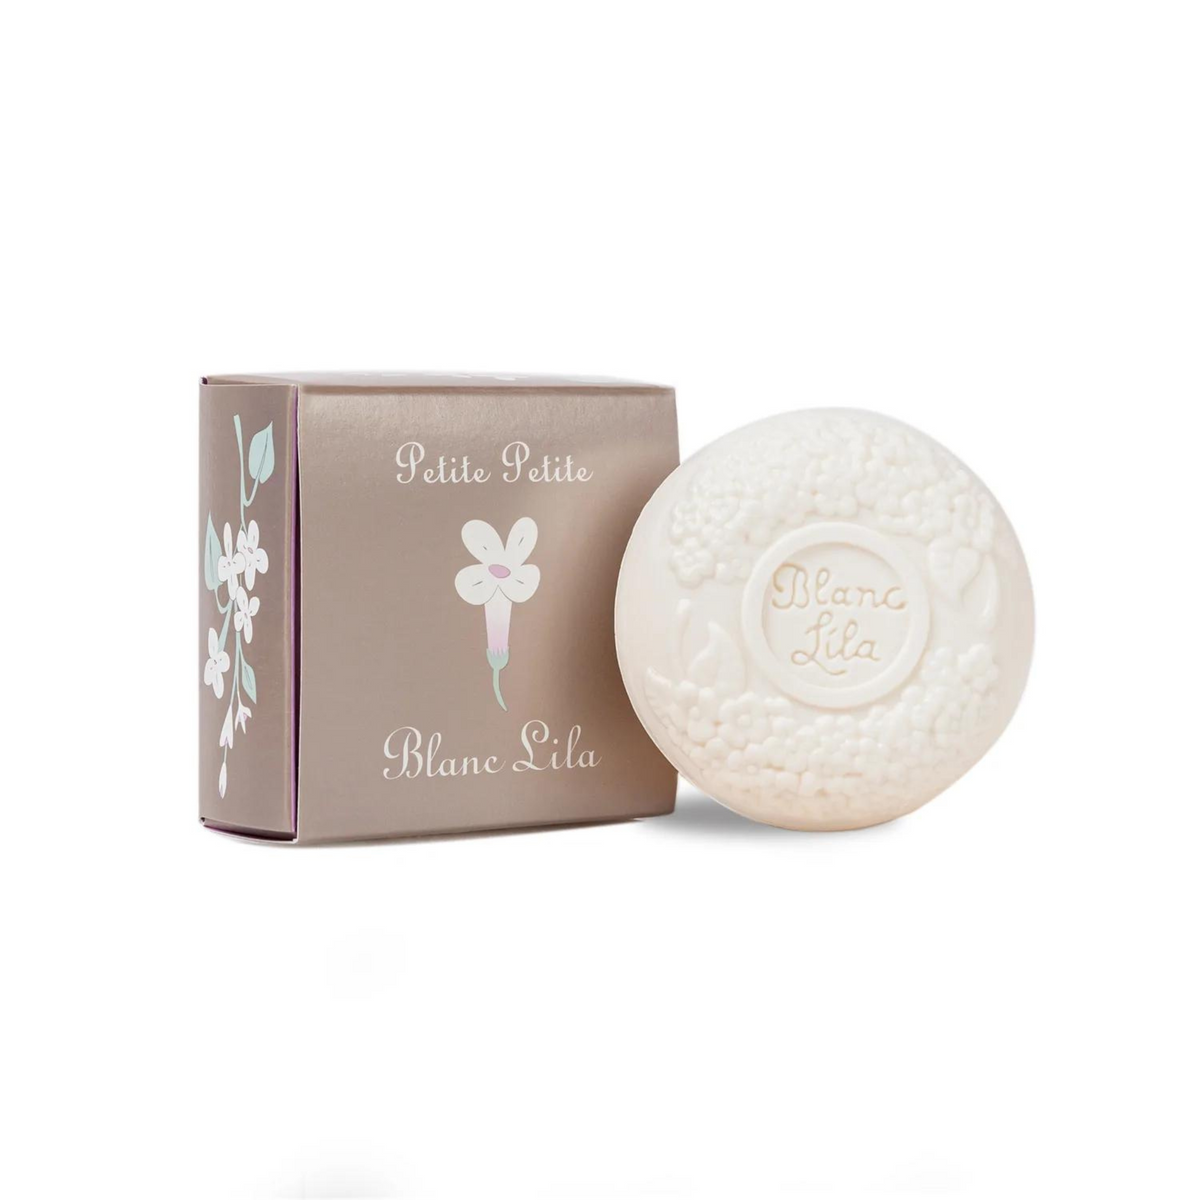 Primary Image of Blanc Lila Petite Petite Soap